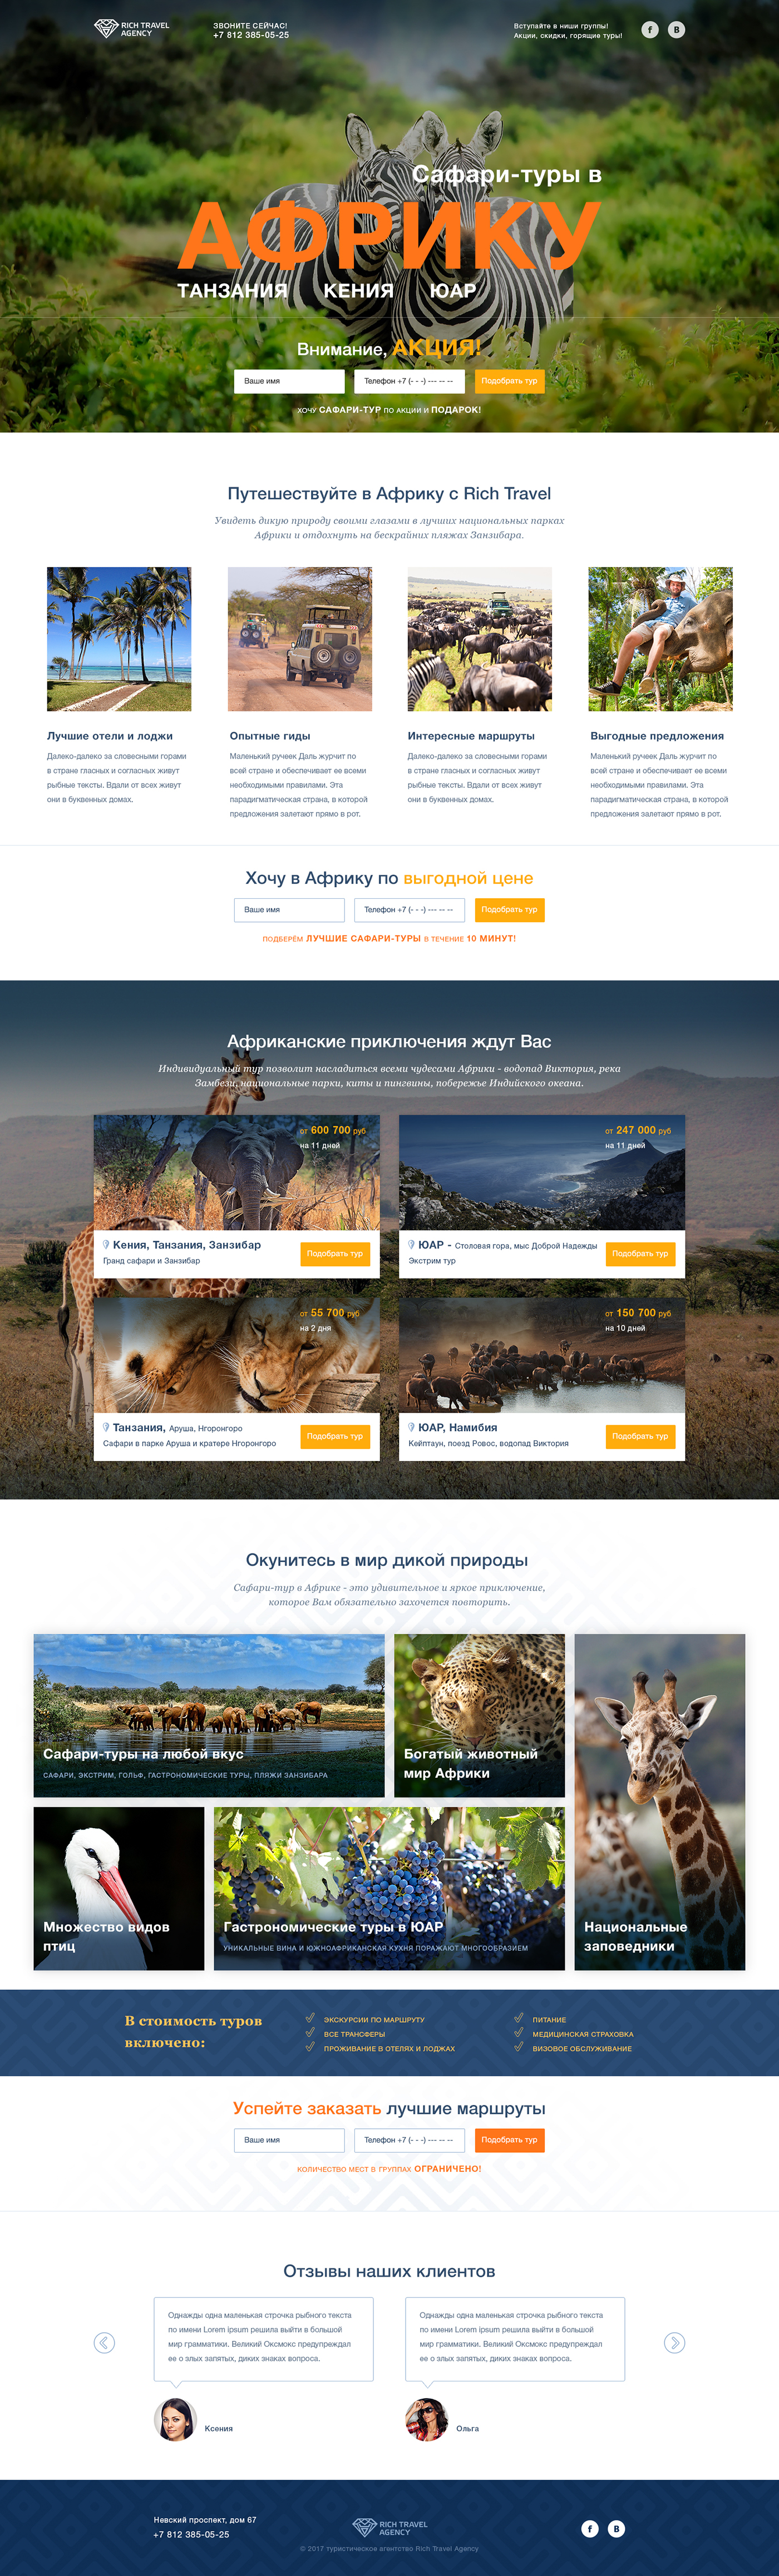 safari landing africa Сафари туризм продающая страница лендинг